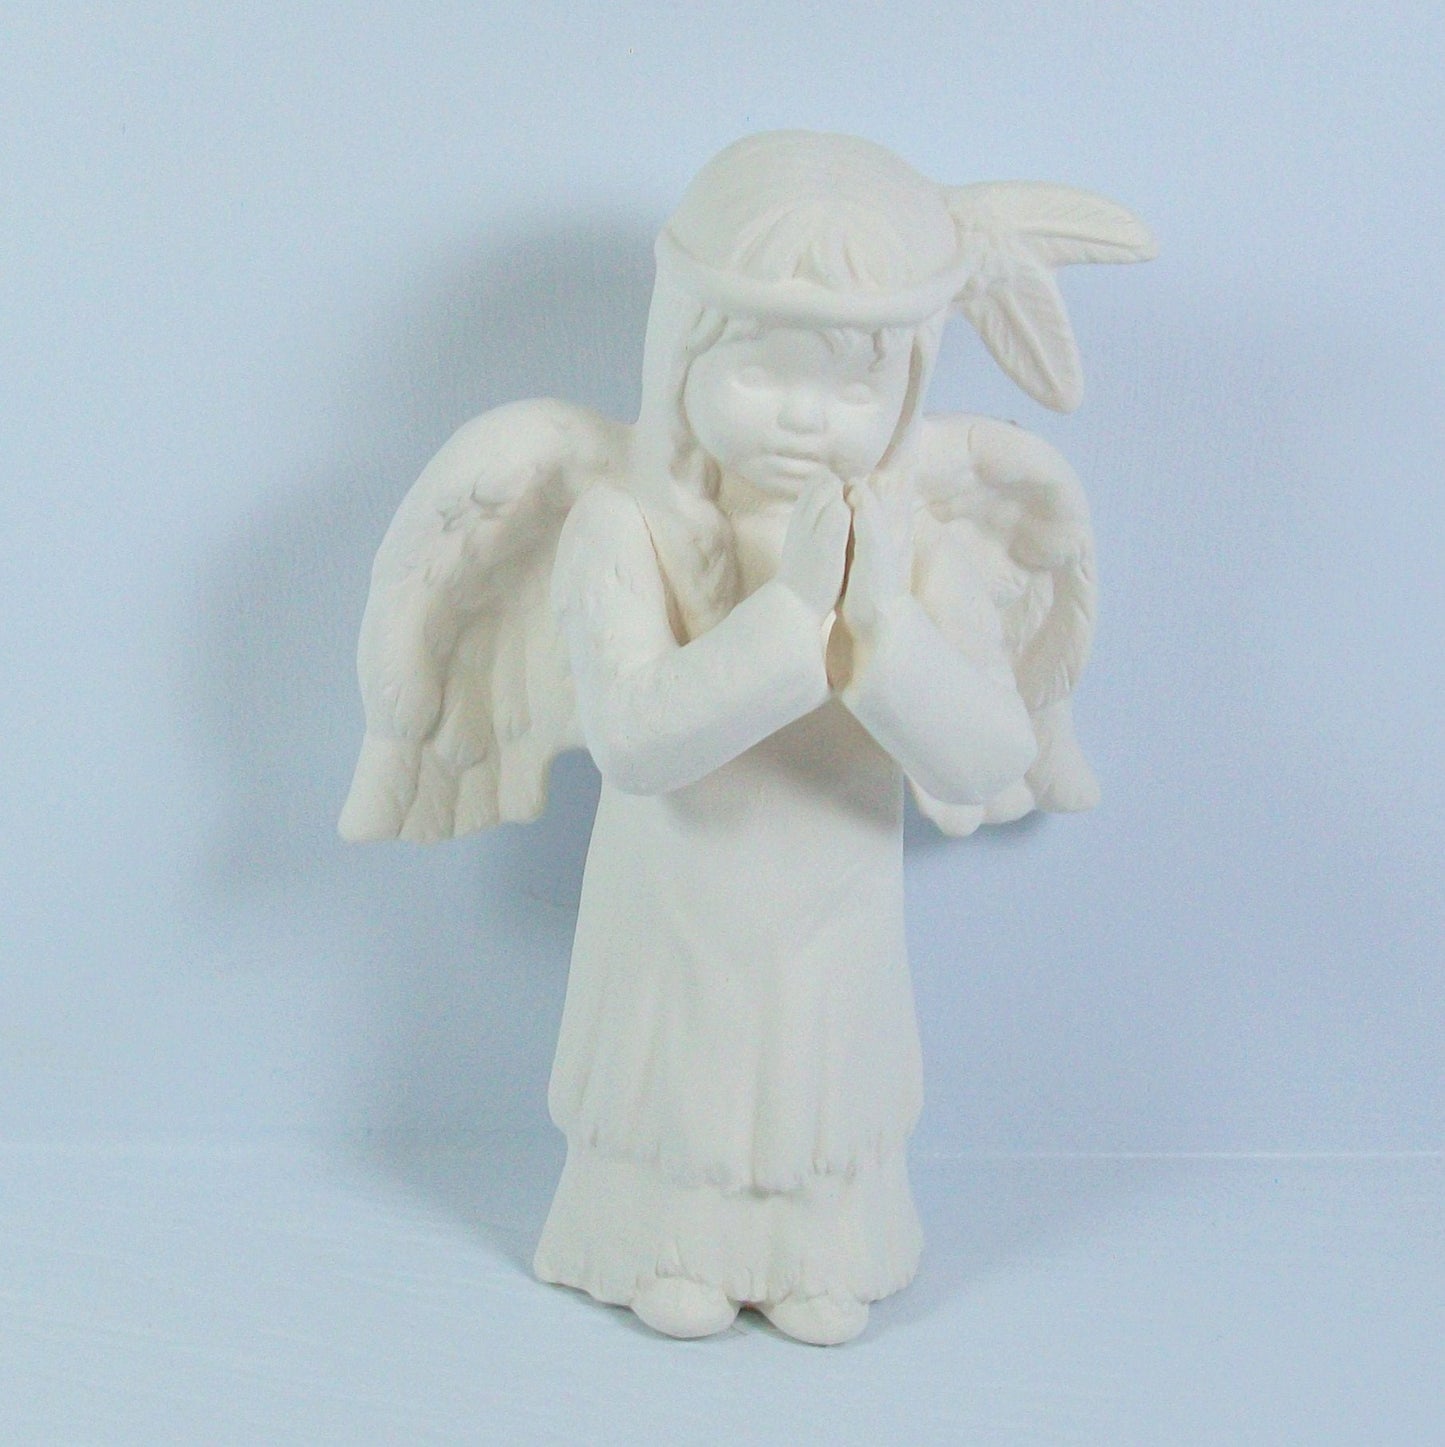 Handmade Unpainted Ceramic Angel Figurine / Native American Style Angel Statue / Ceramics to Paint / Paintable Ceramics / Paint It Yourself